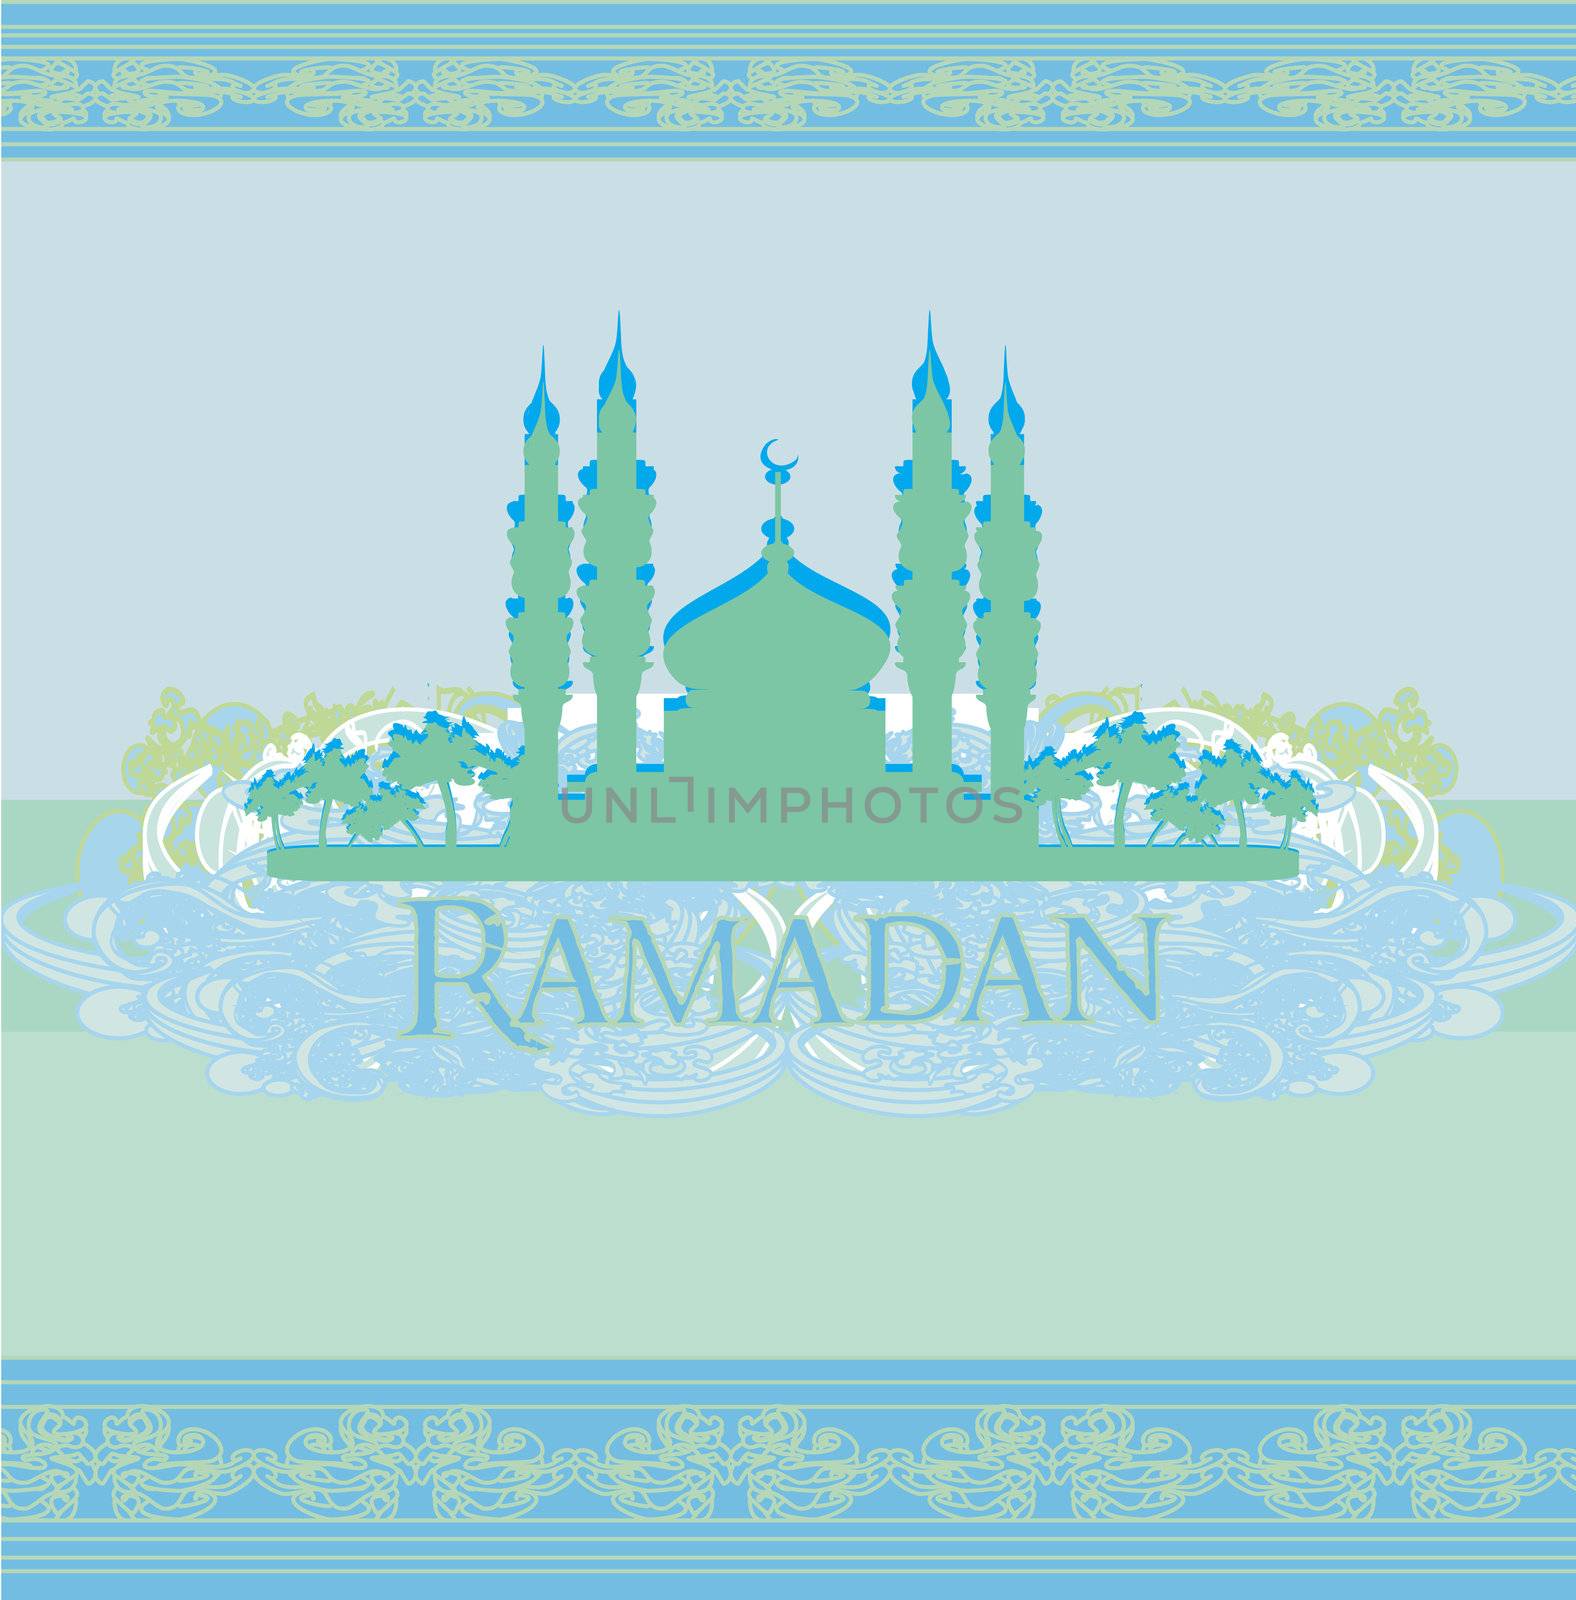 Ramadan background - mosque silhouette vector card